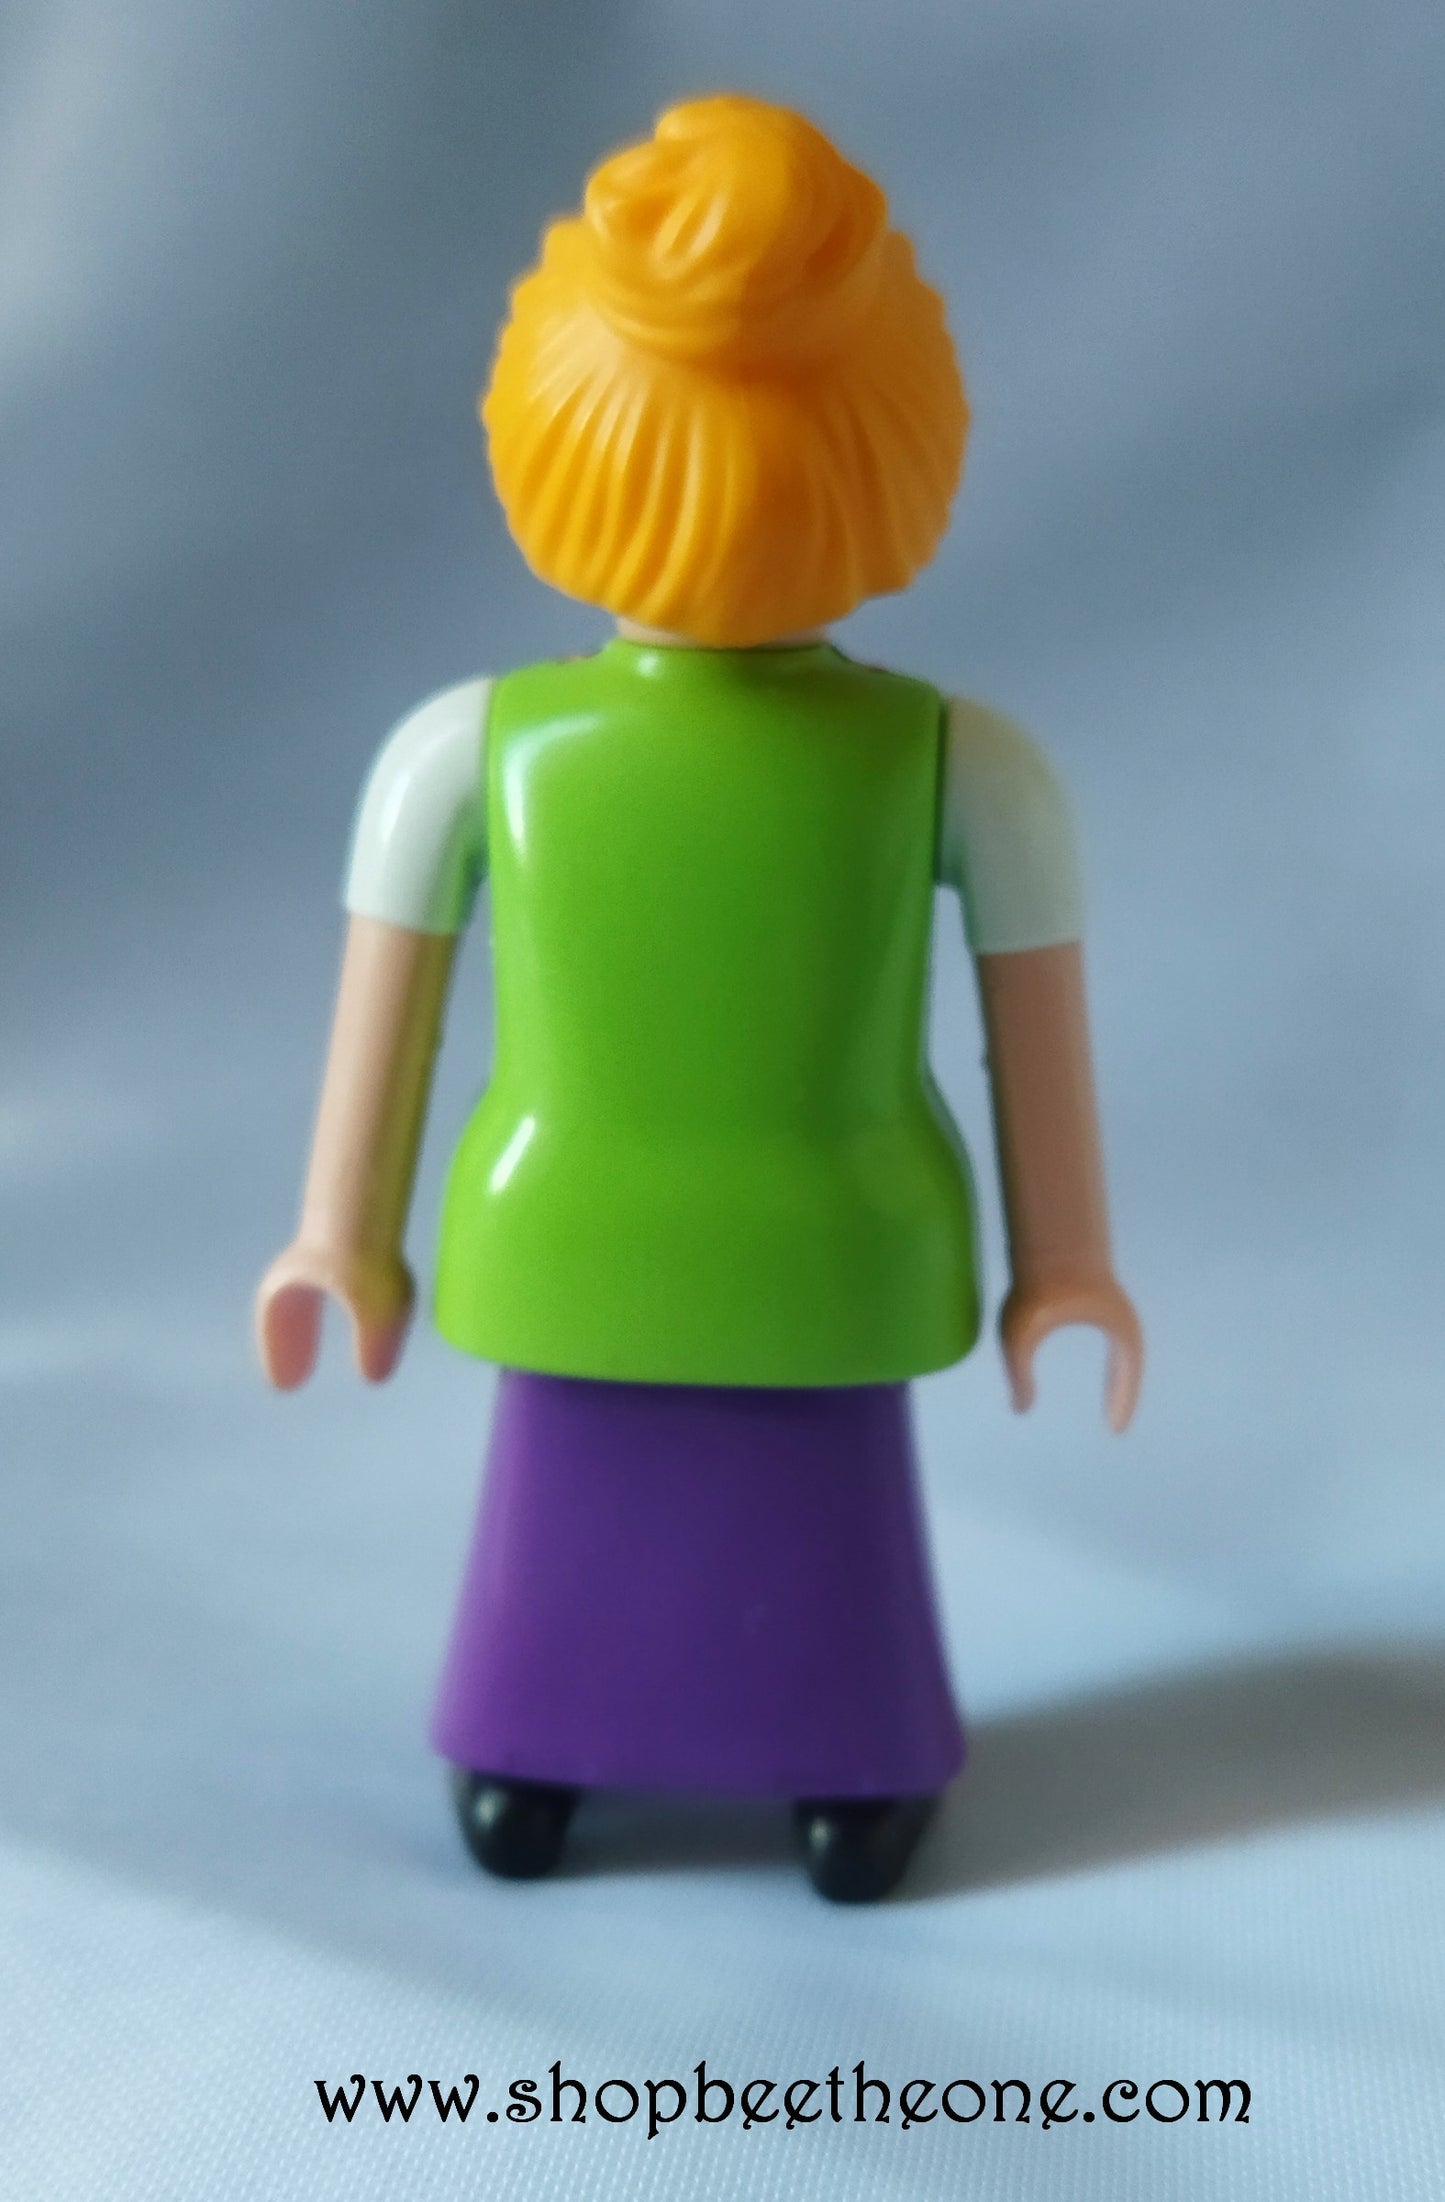 Femme et chevreau 70163 - Playmobil/Milka 2019 - Figurine Klicky Femme